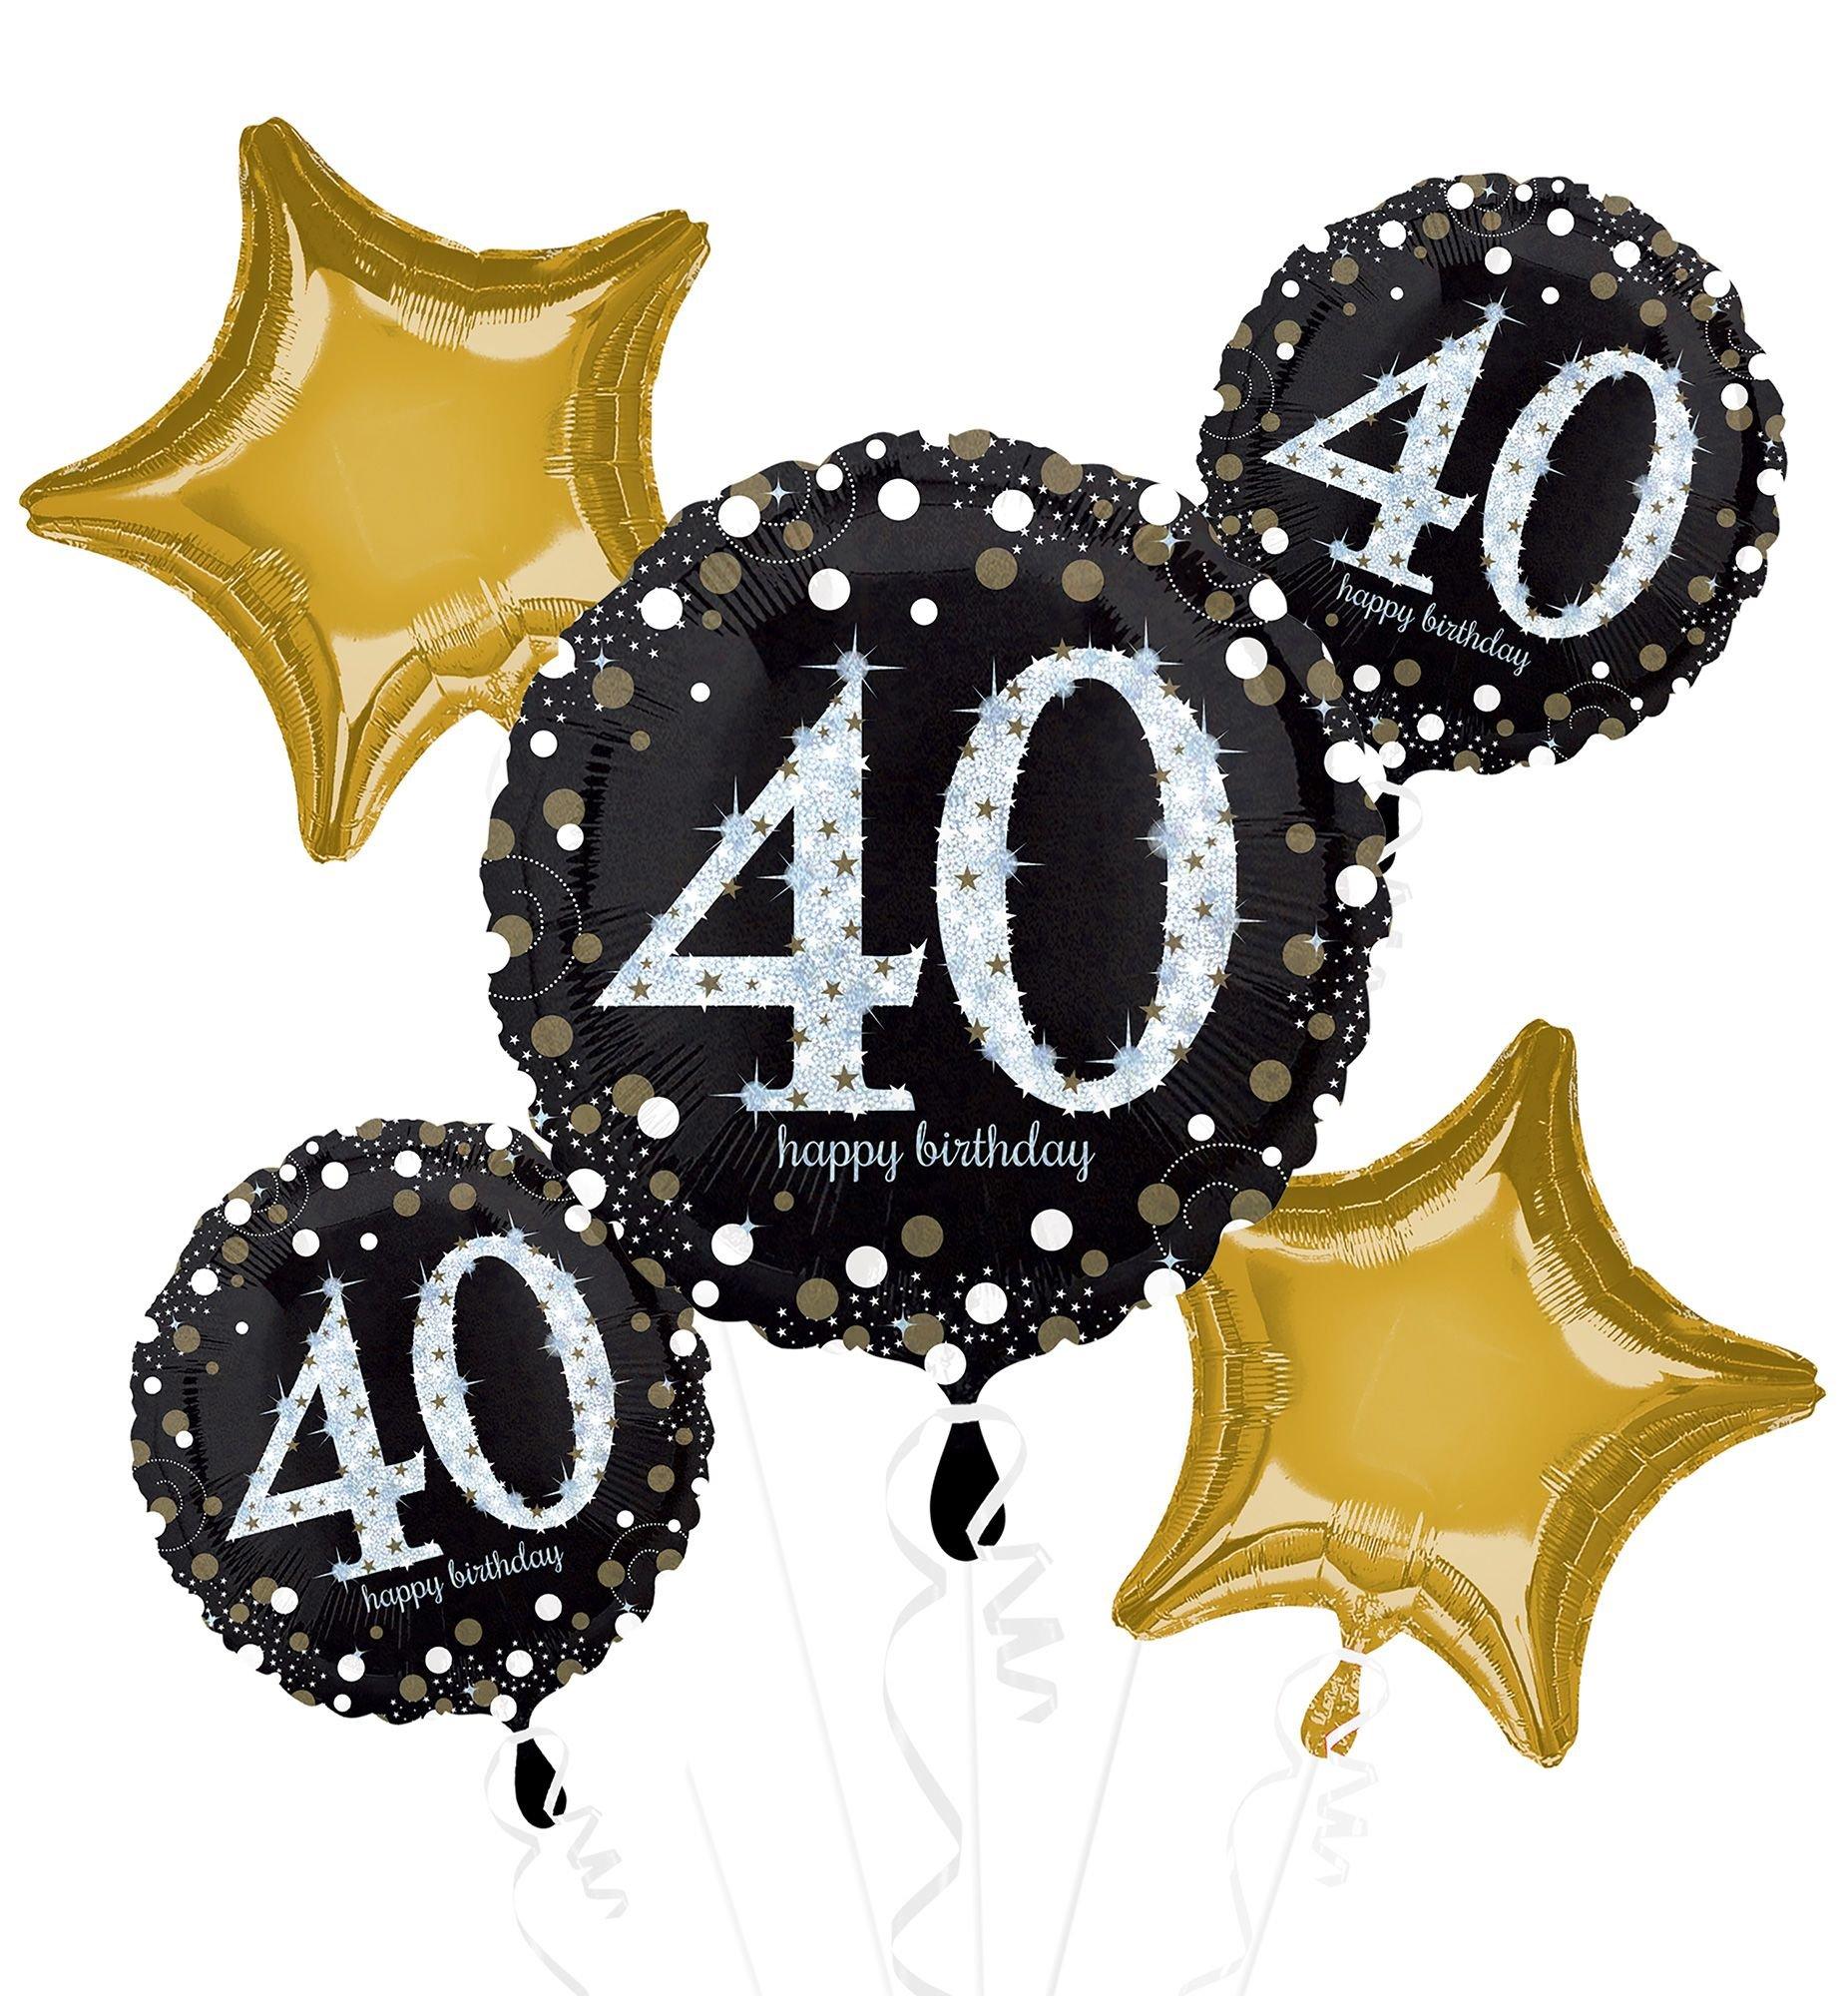 40th Birthday Balloon Bouquet 5pc - Sparkling Celebration